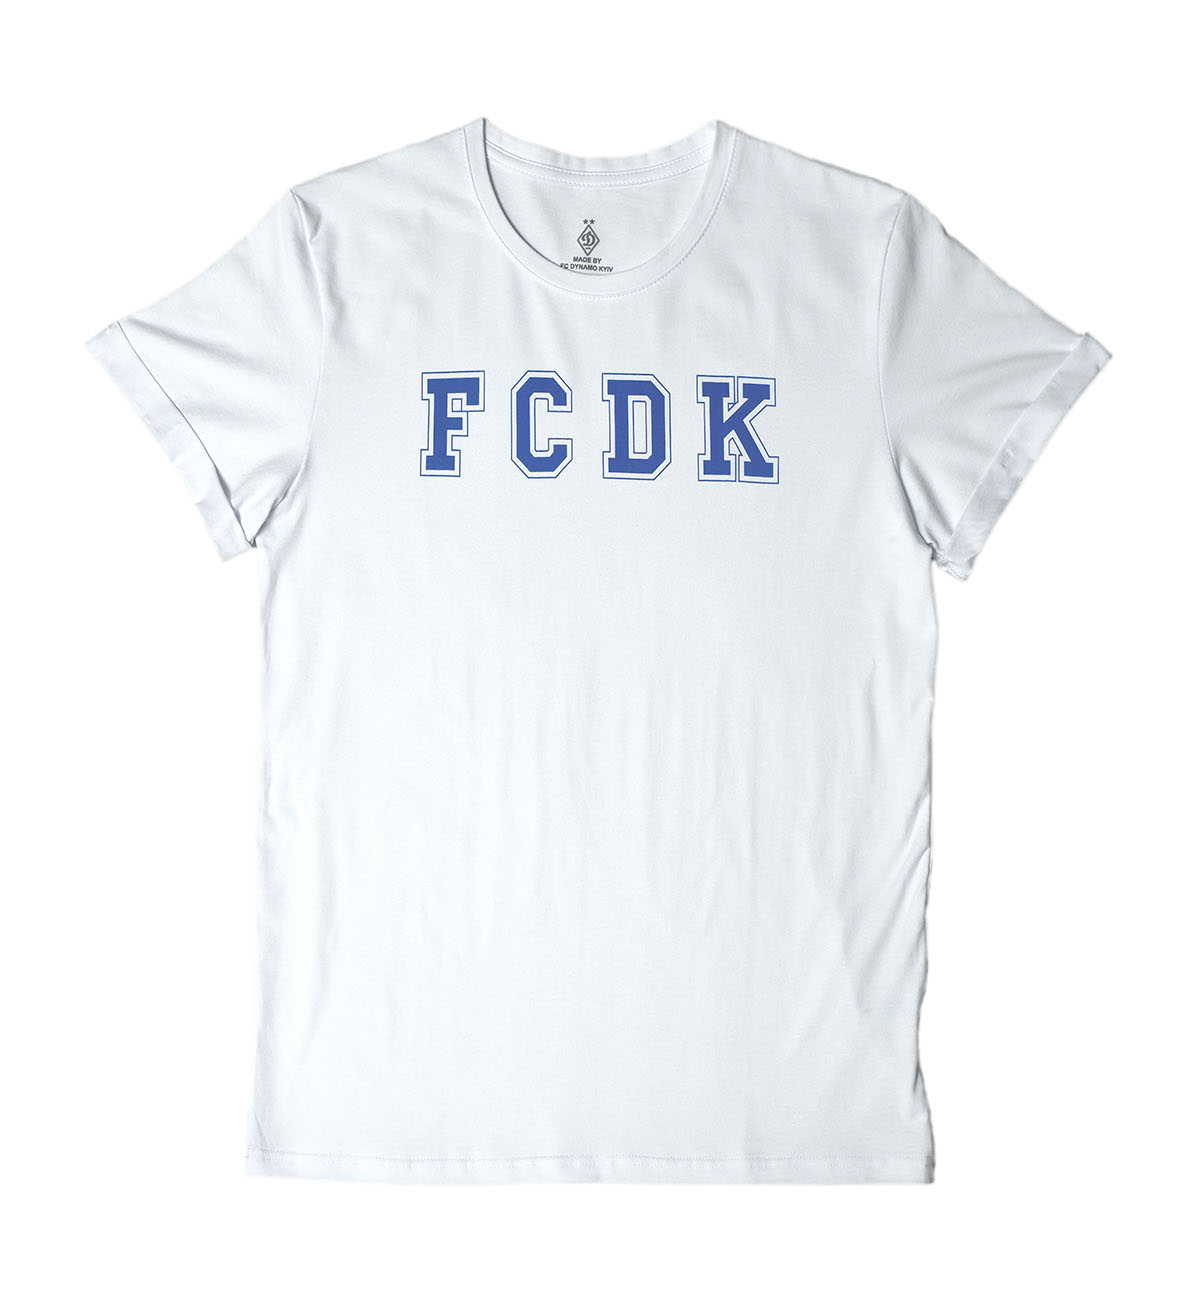 White T-shirt "FCDK"